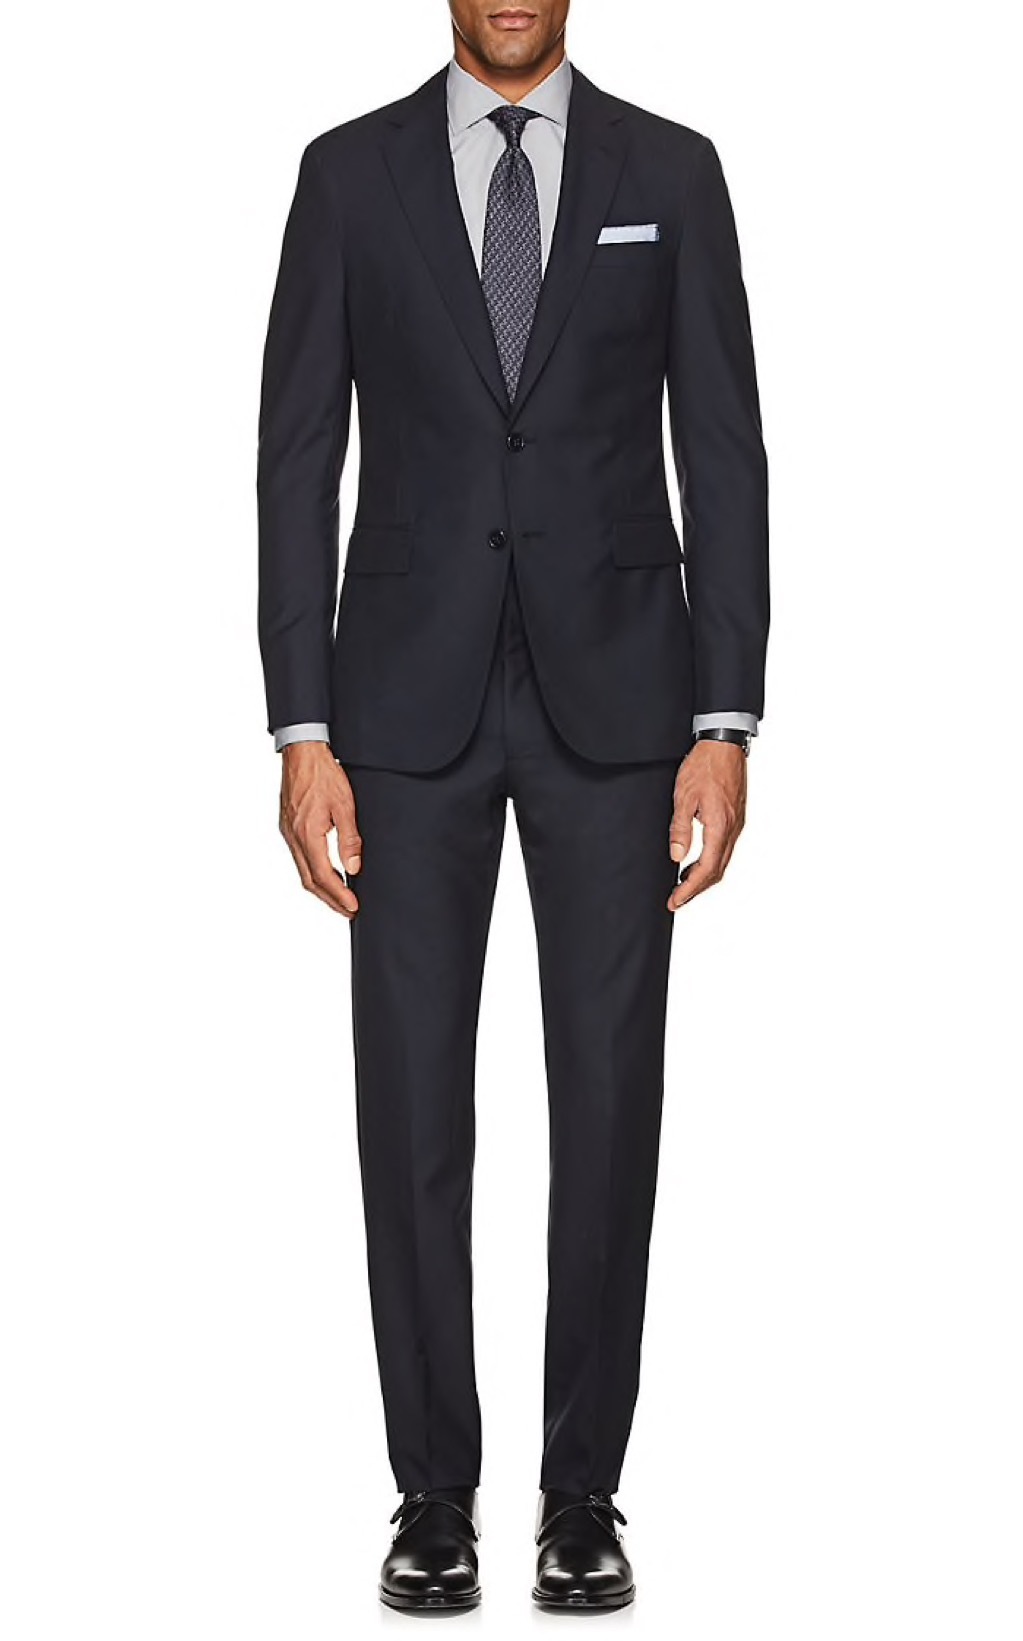 Ralph Lauren suit Same Suit